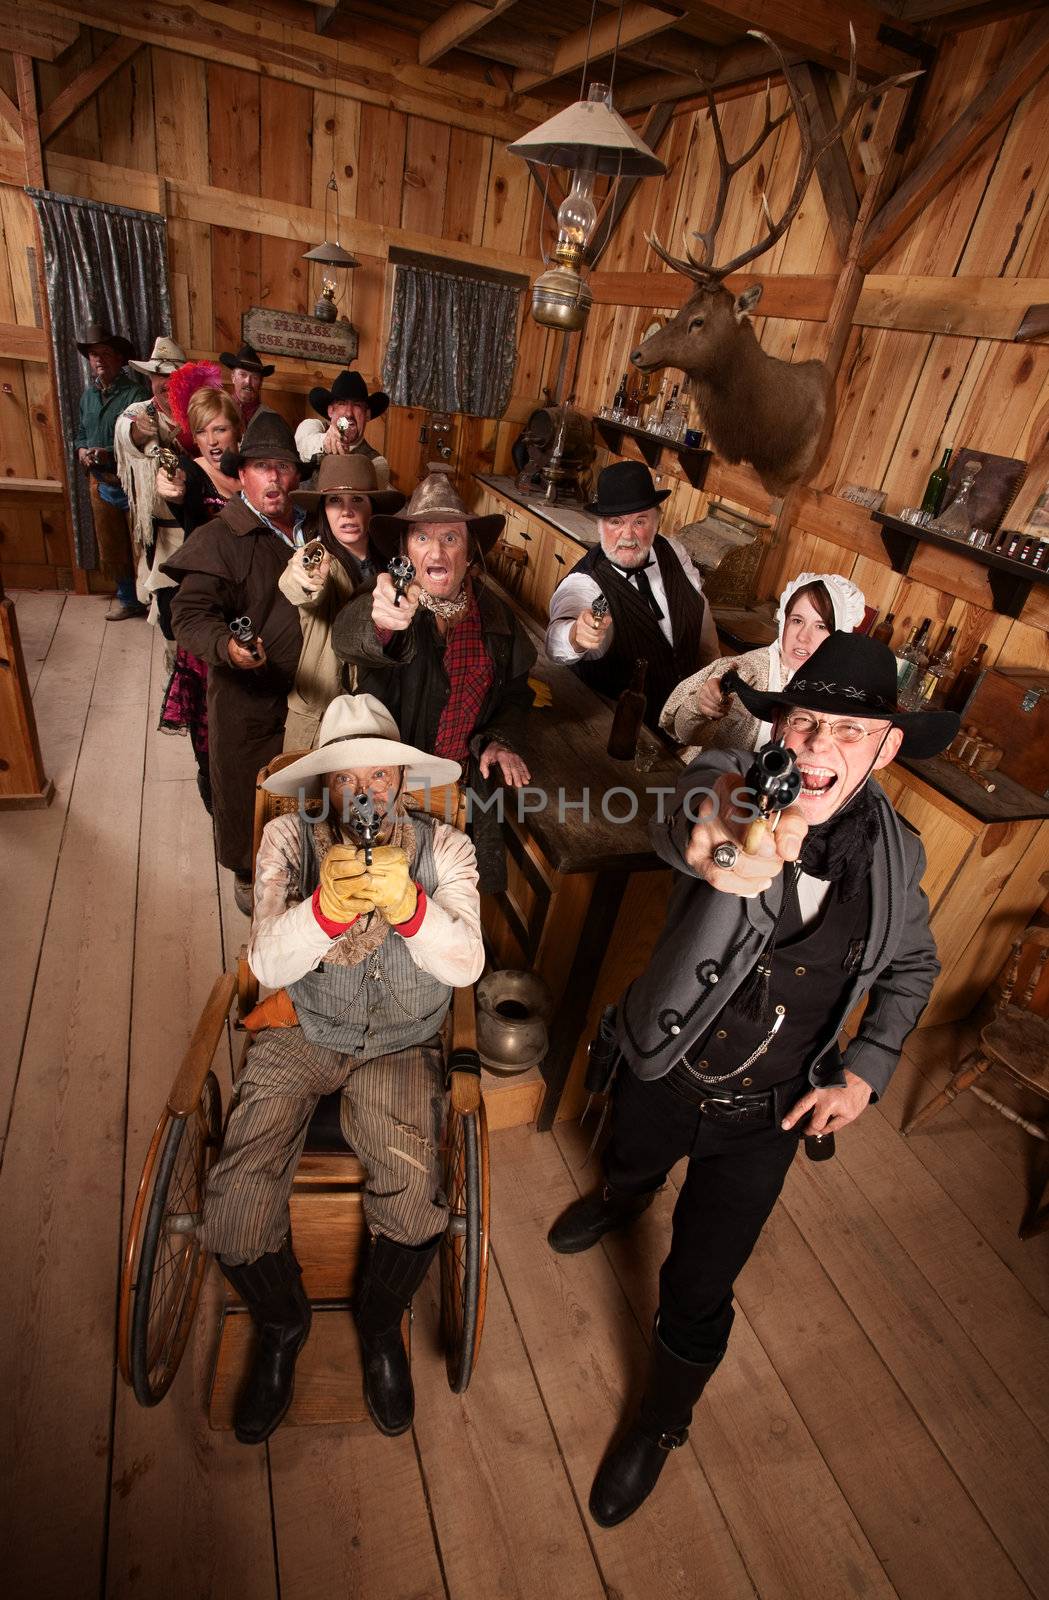 Rowdy customers in old west saloon firing their guns